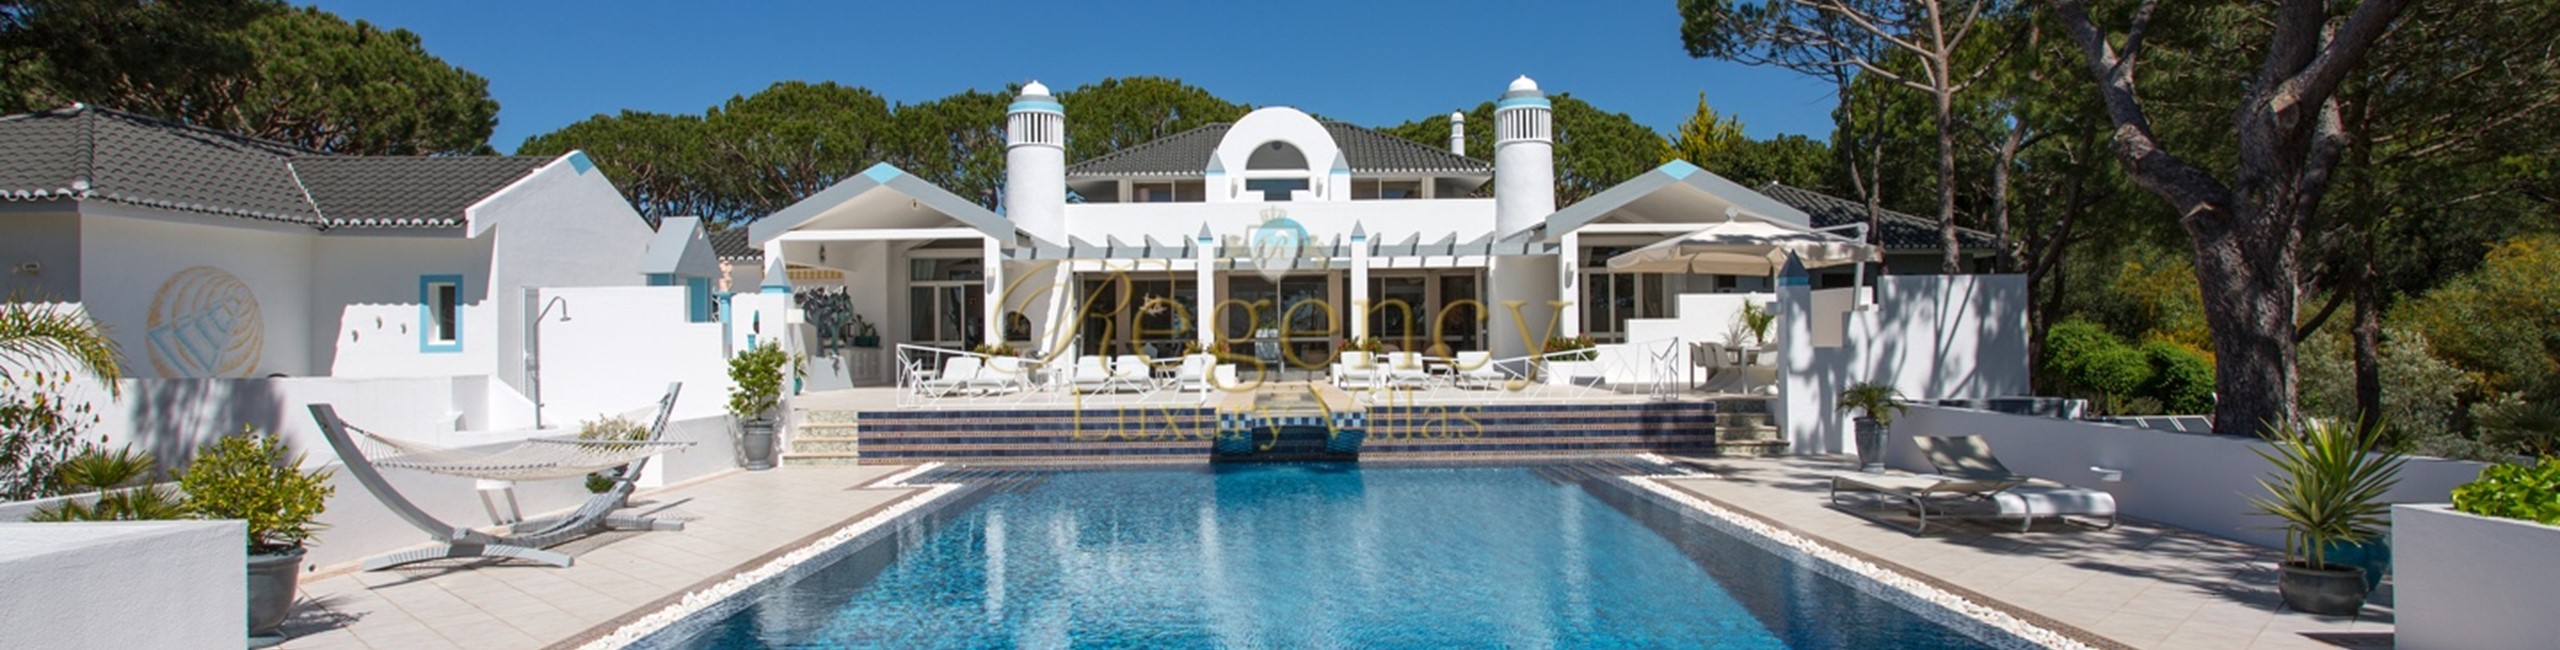 Luxury Villa To Rent In The Algarve